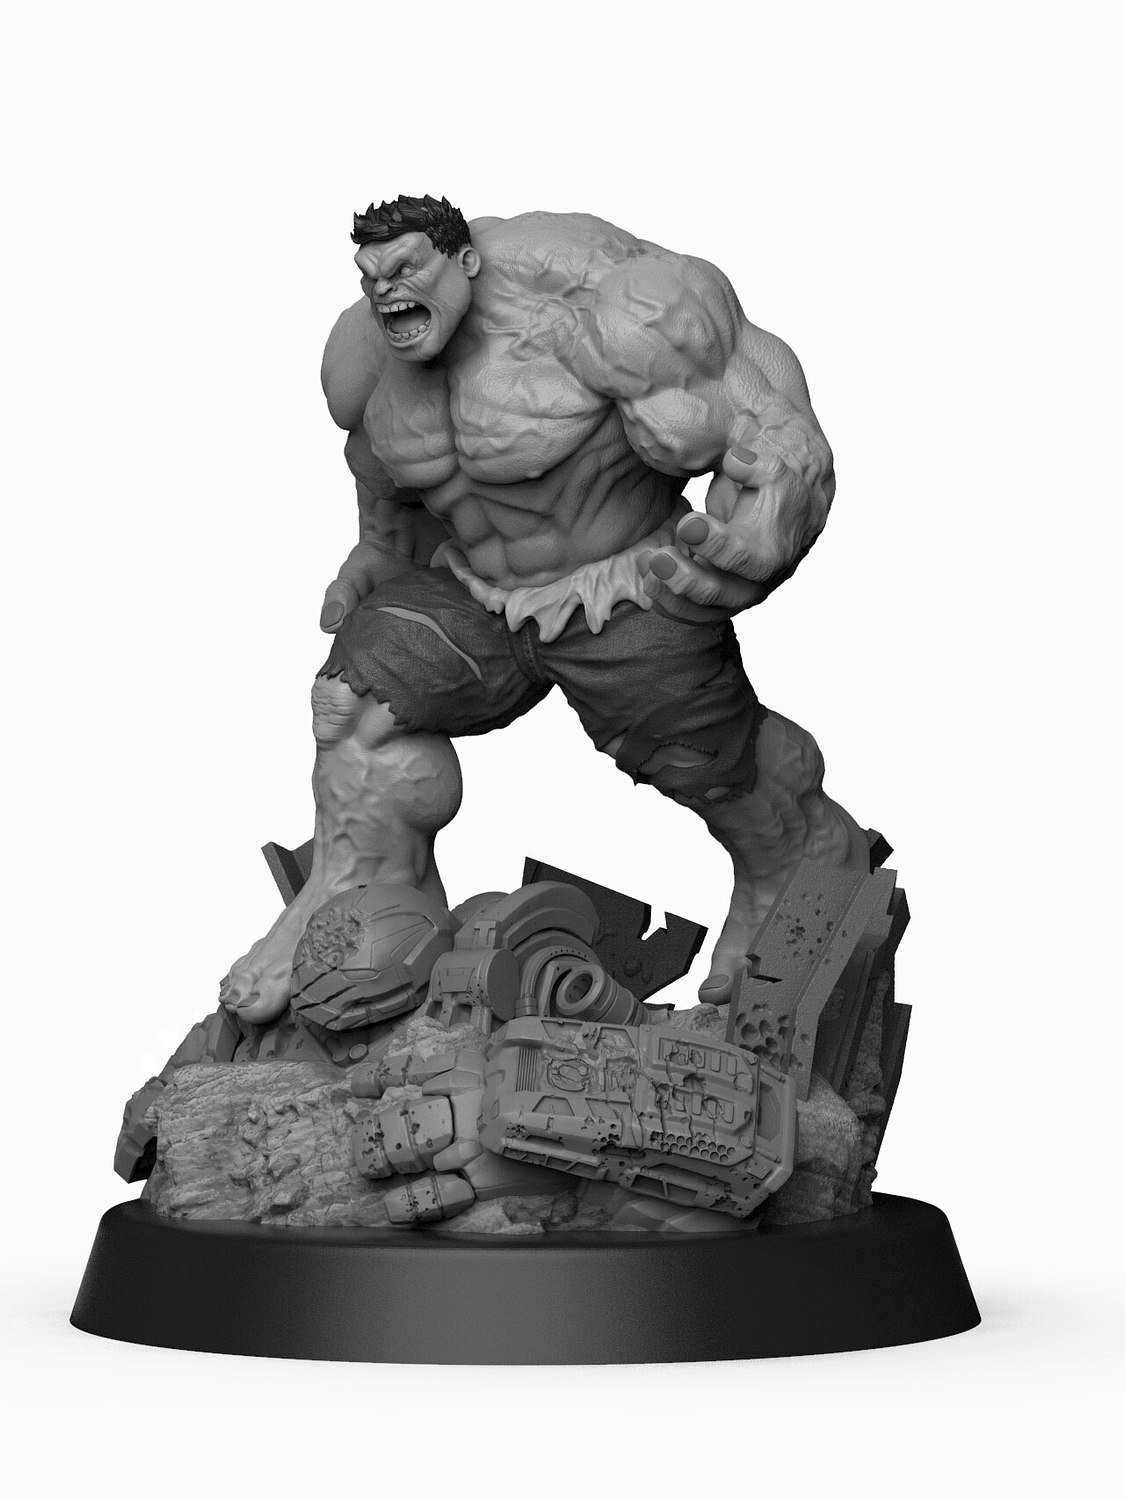 Hulk Smash Hulkbuster Diorama